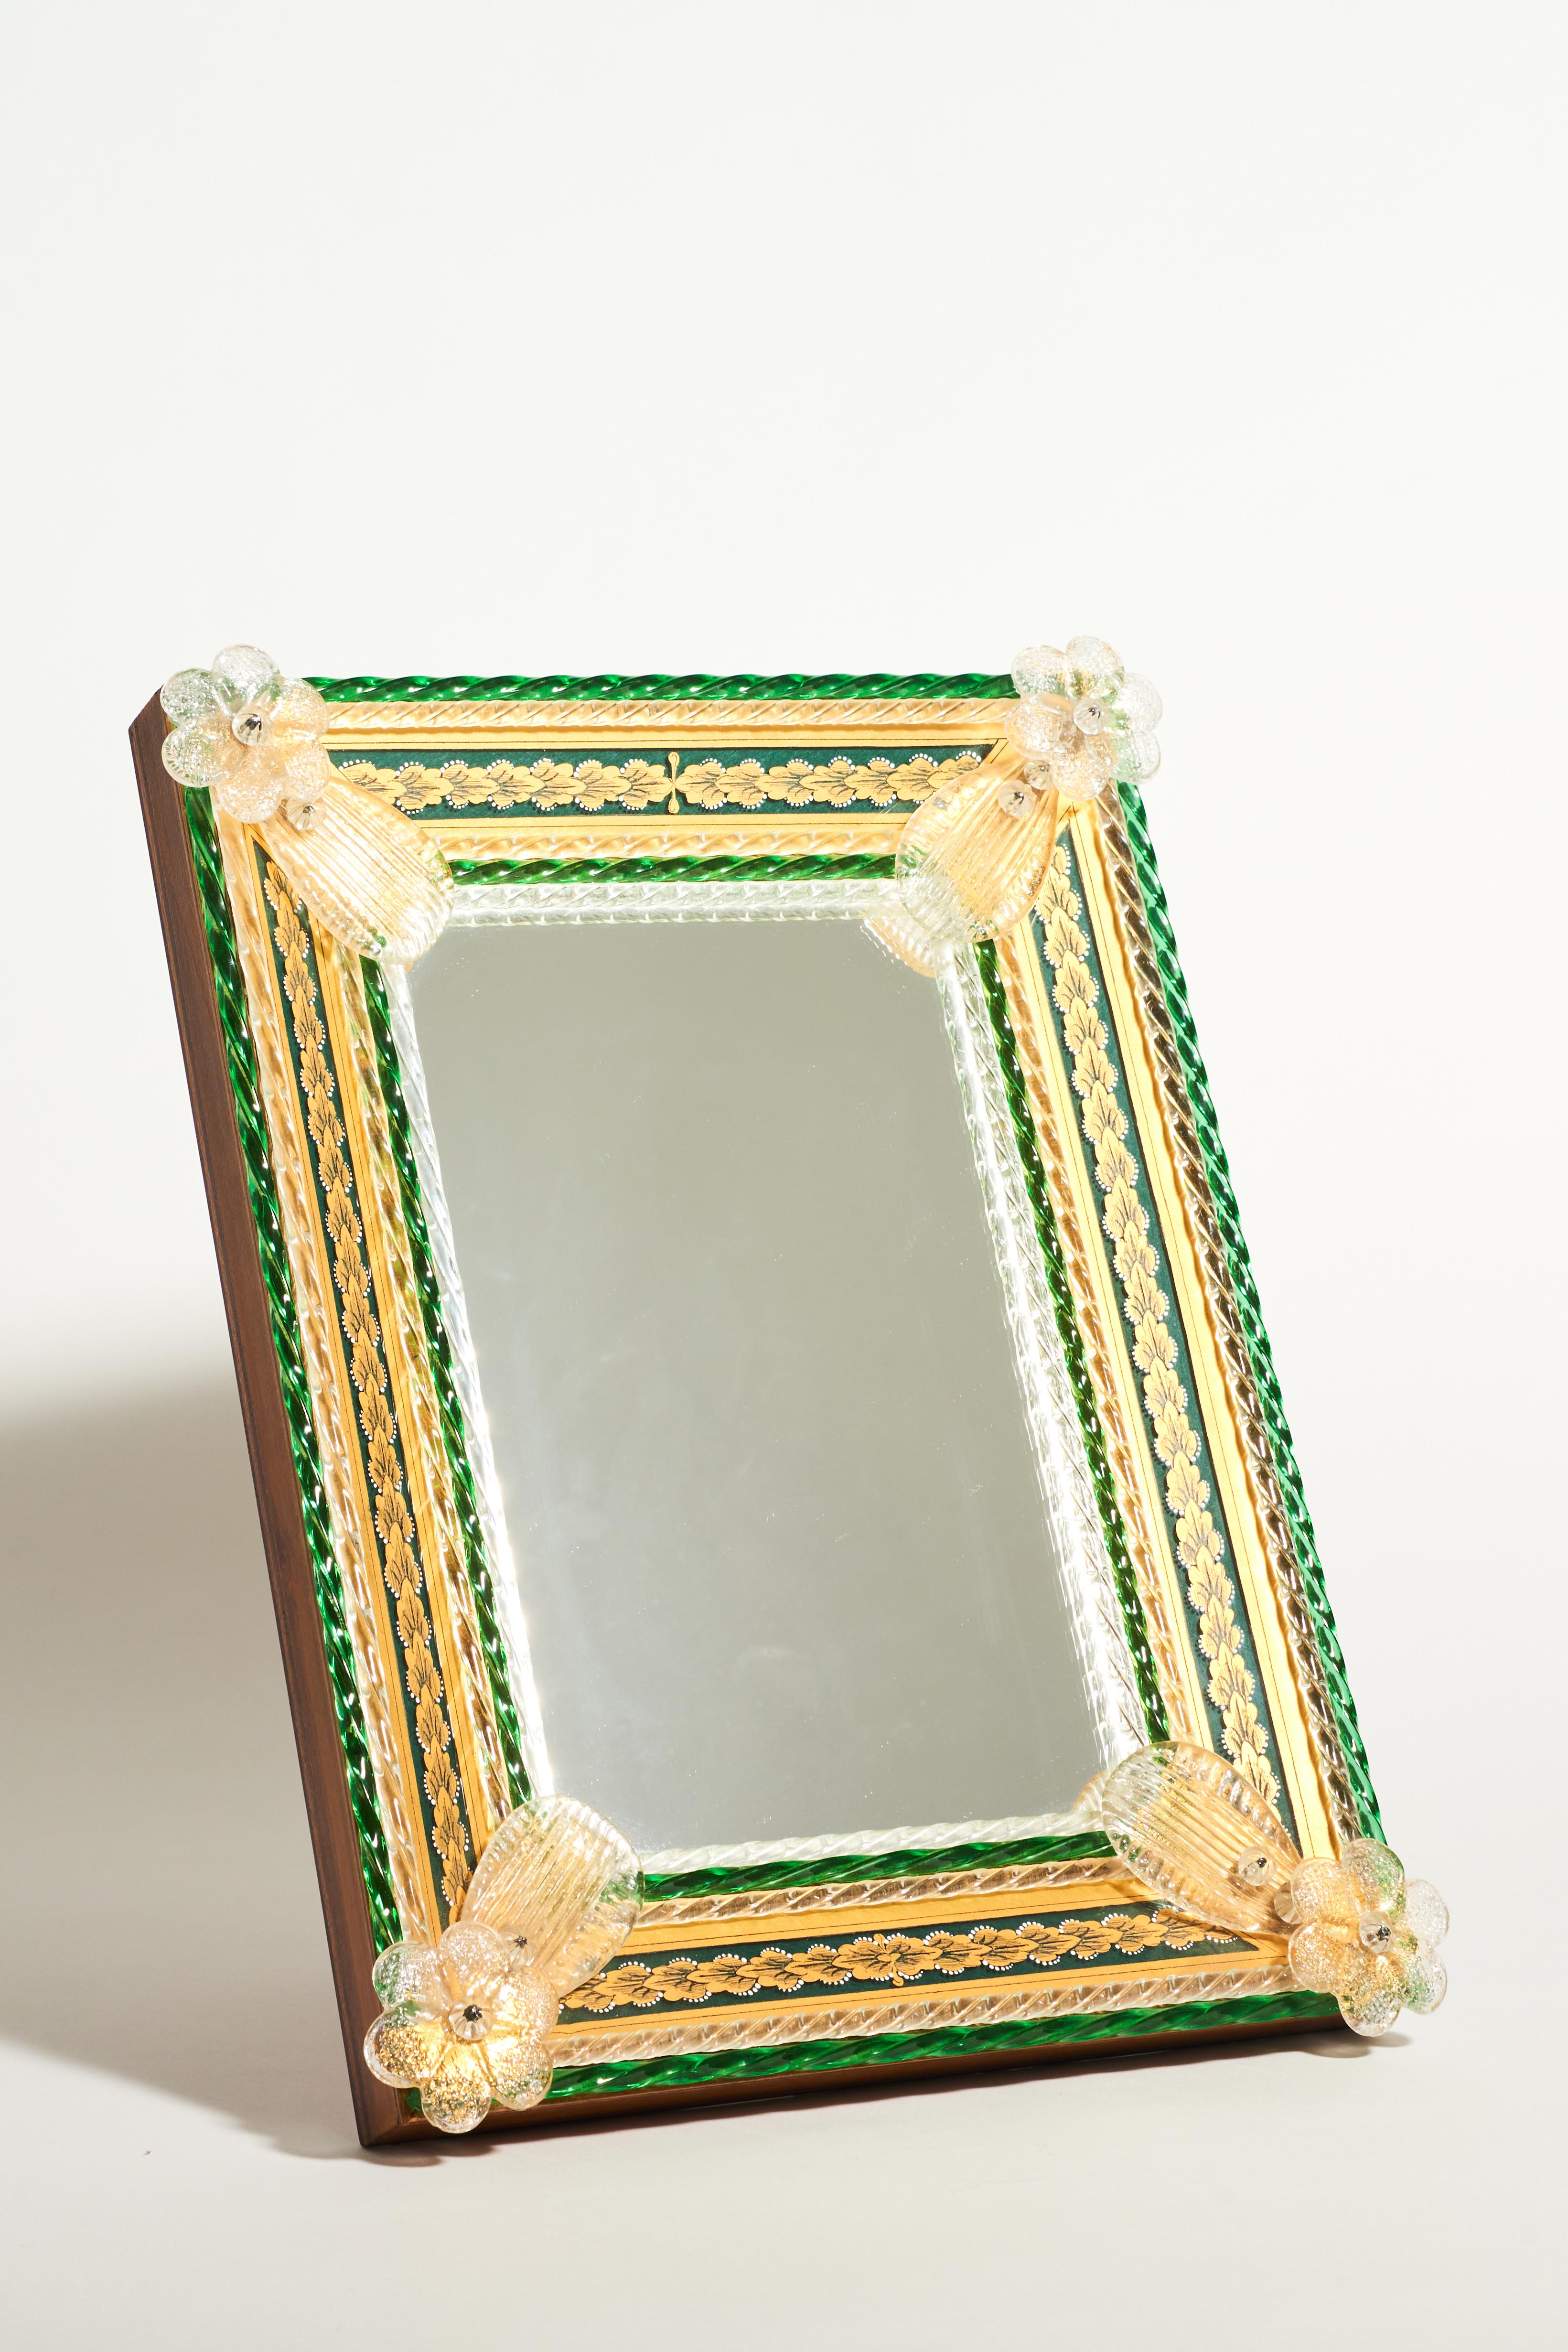 Richly decorative Venetian glass framed mirror.